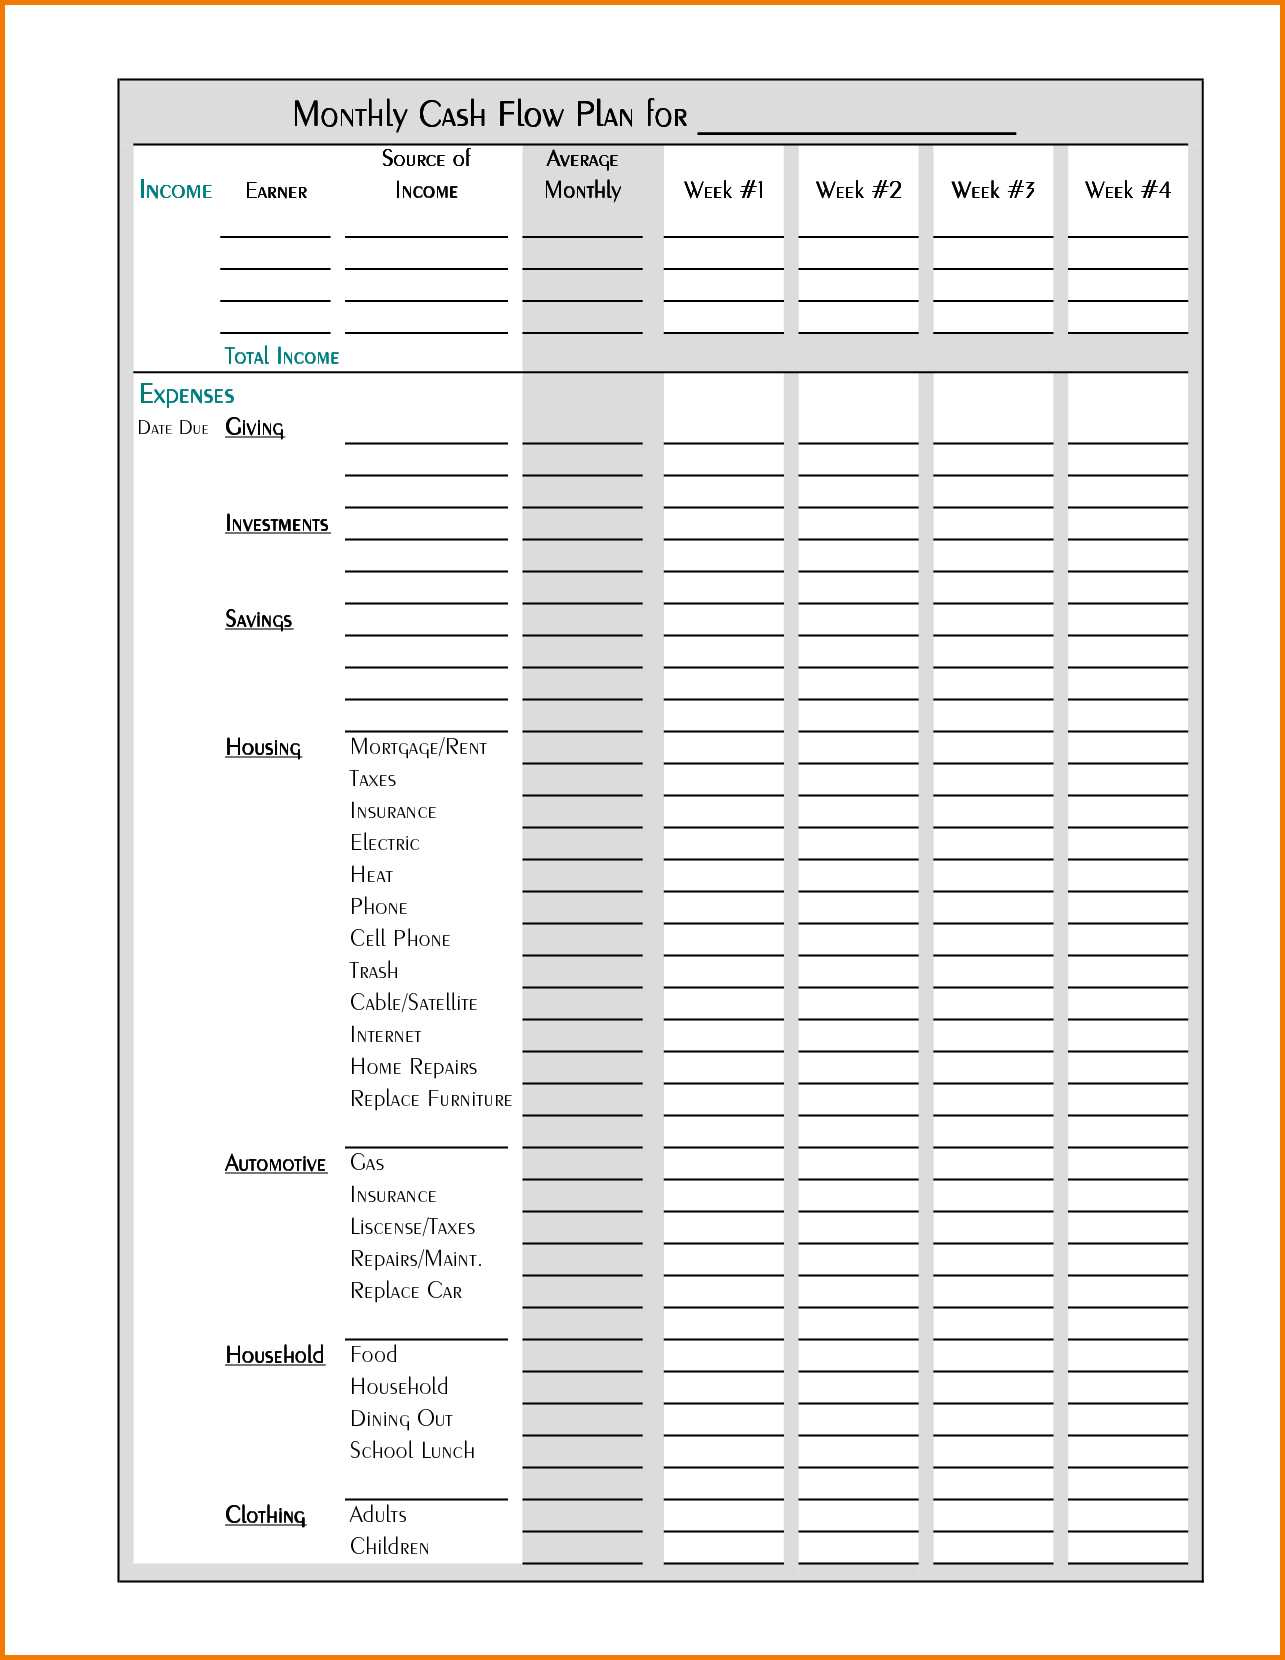 Sales Tax Worksheet Along with Free Printable Expense Sheet Mini Mfagency